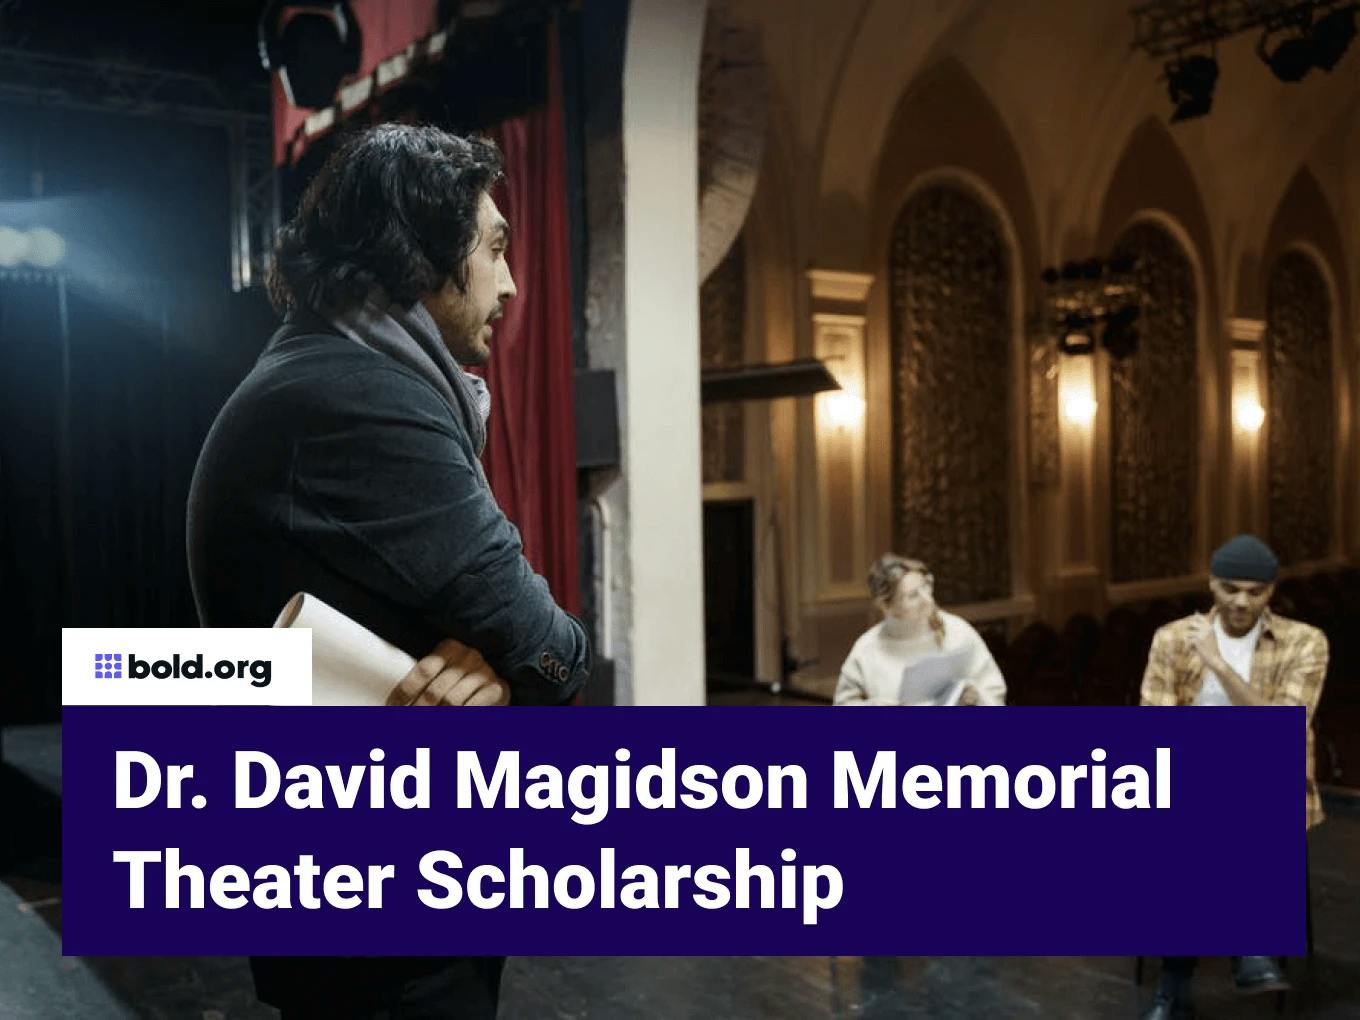 Dr. Magidson Memorial Theater Scholarship